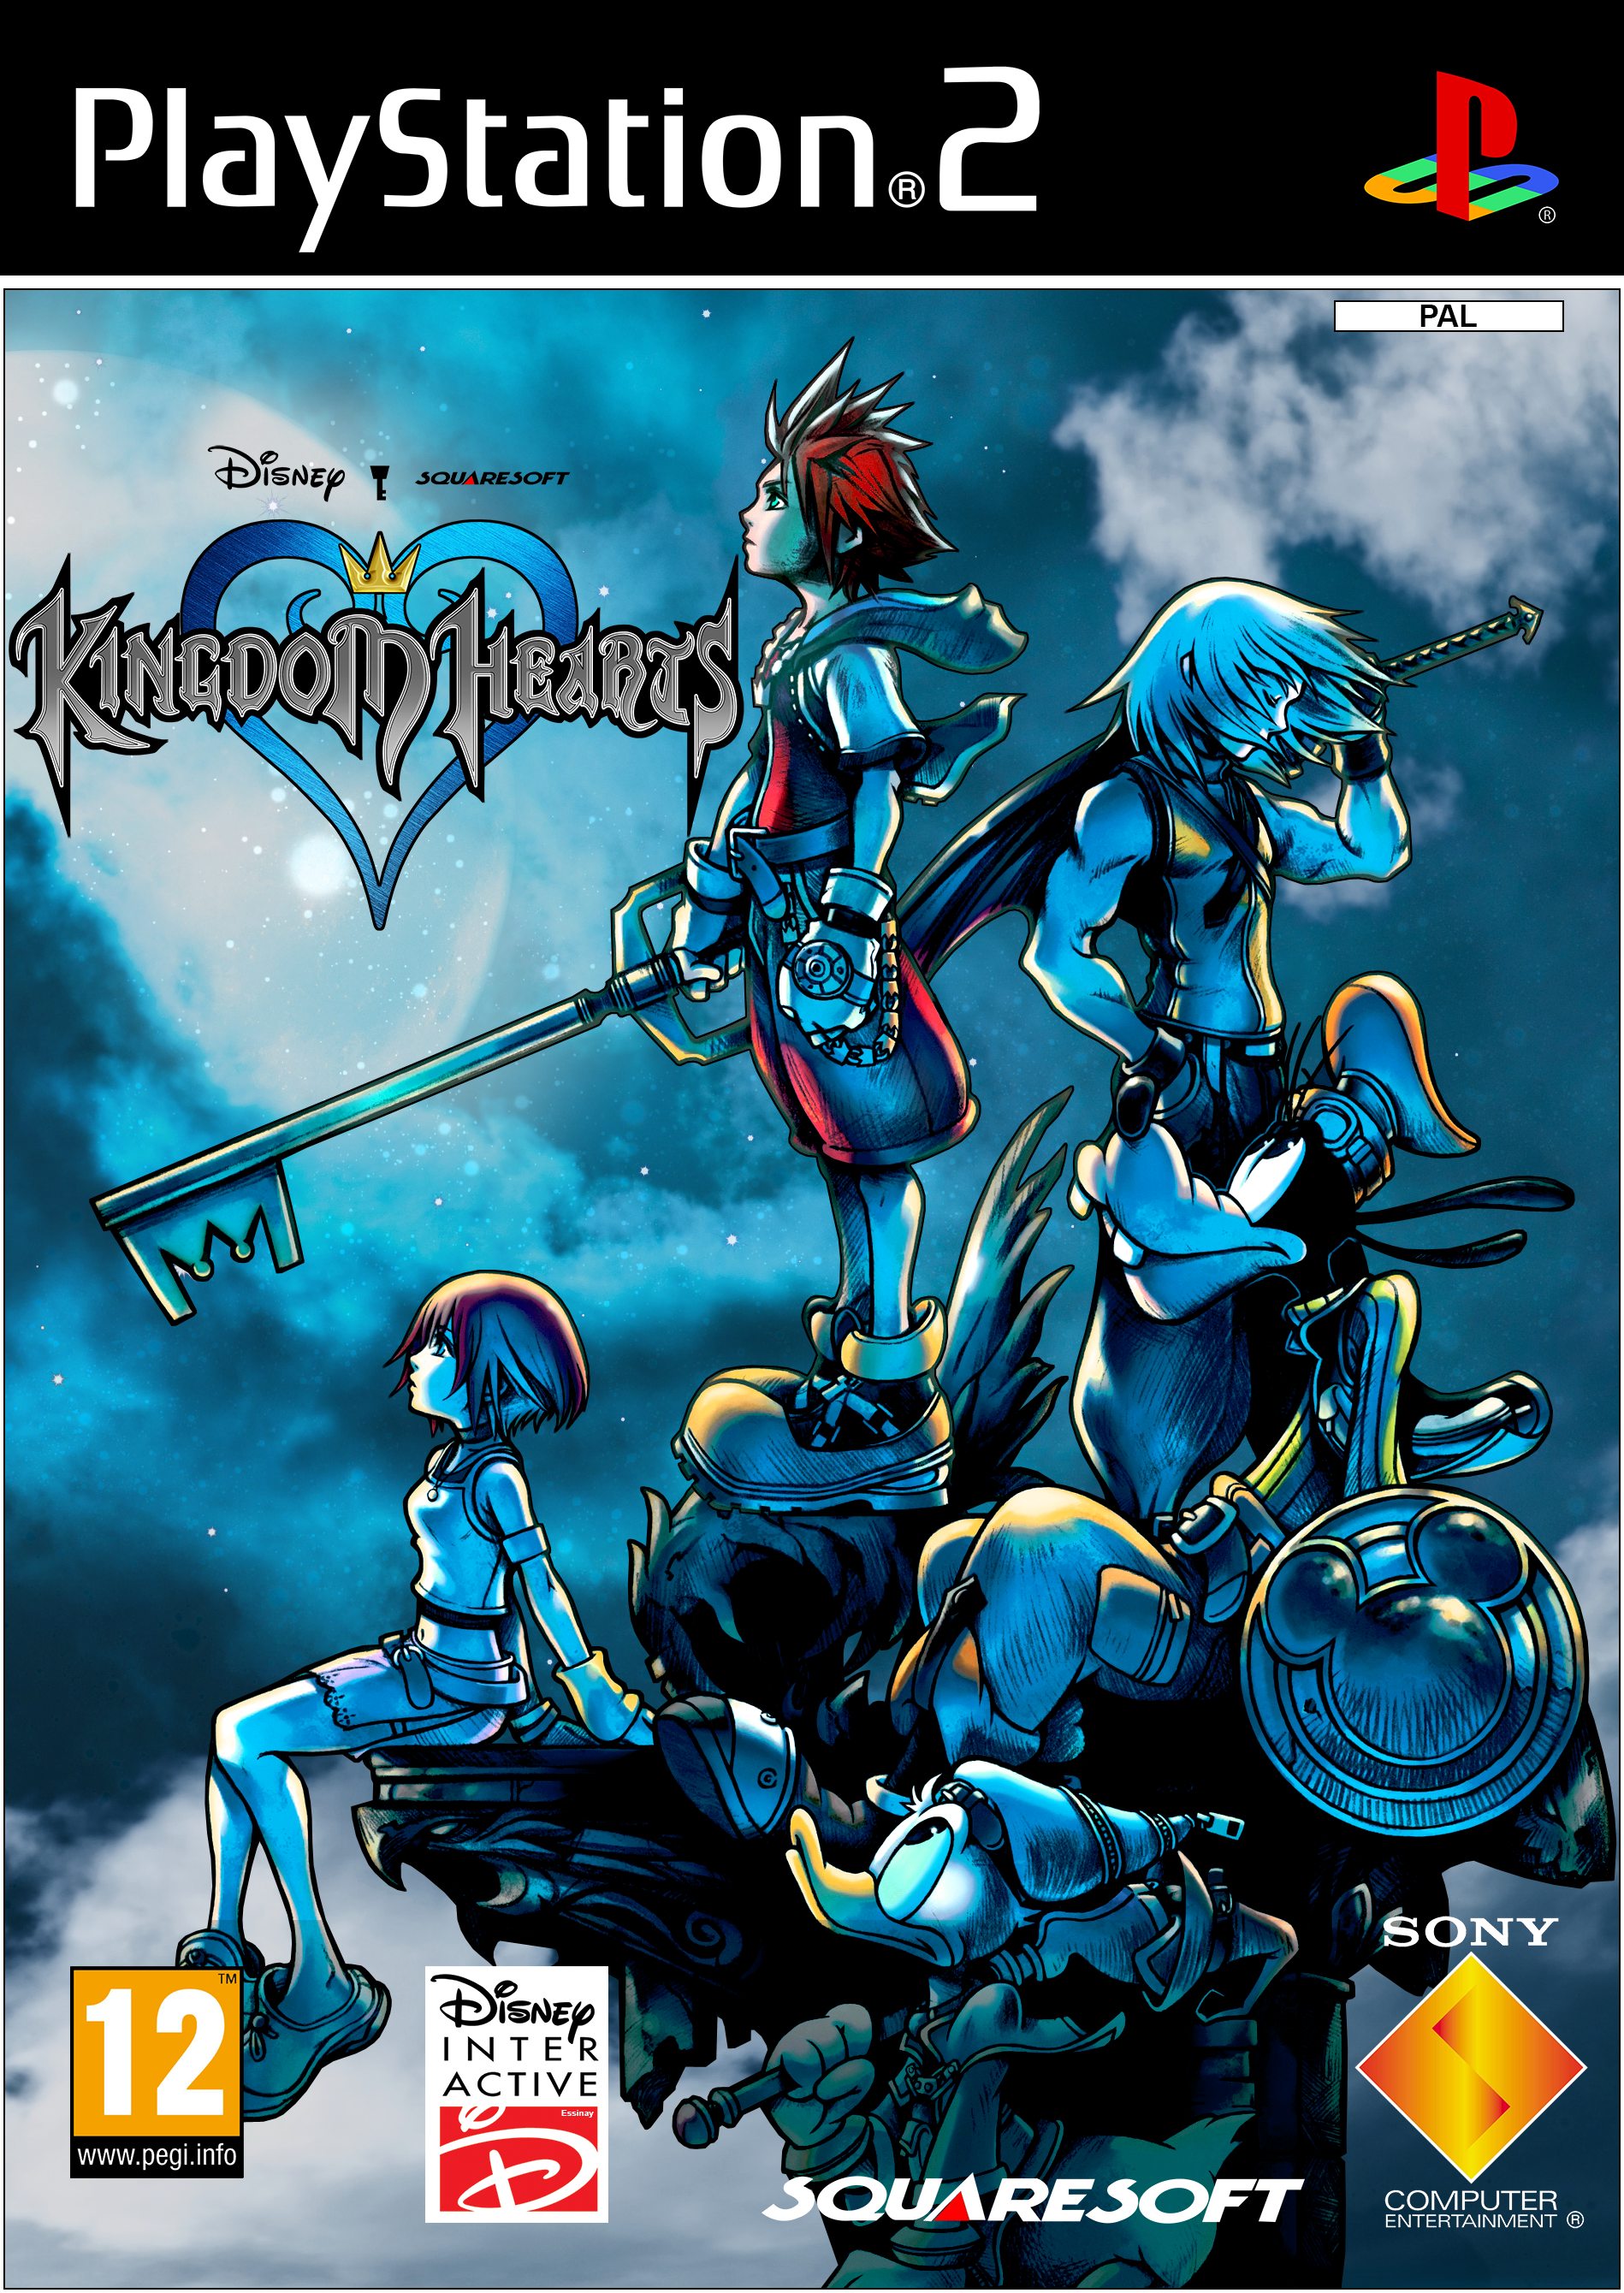 Kingdom Hearts custom cover ps2 by Essinay on DeviantArt